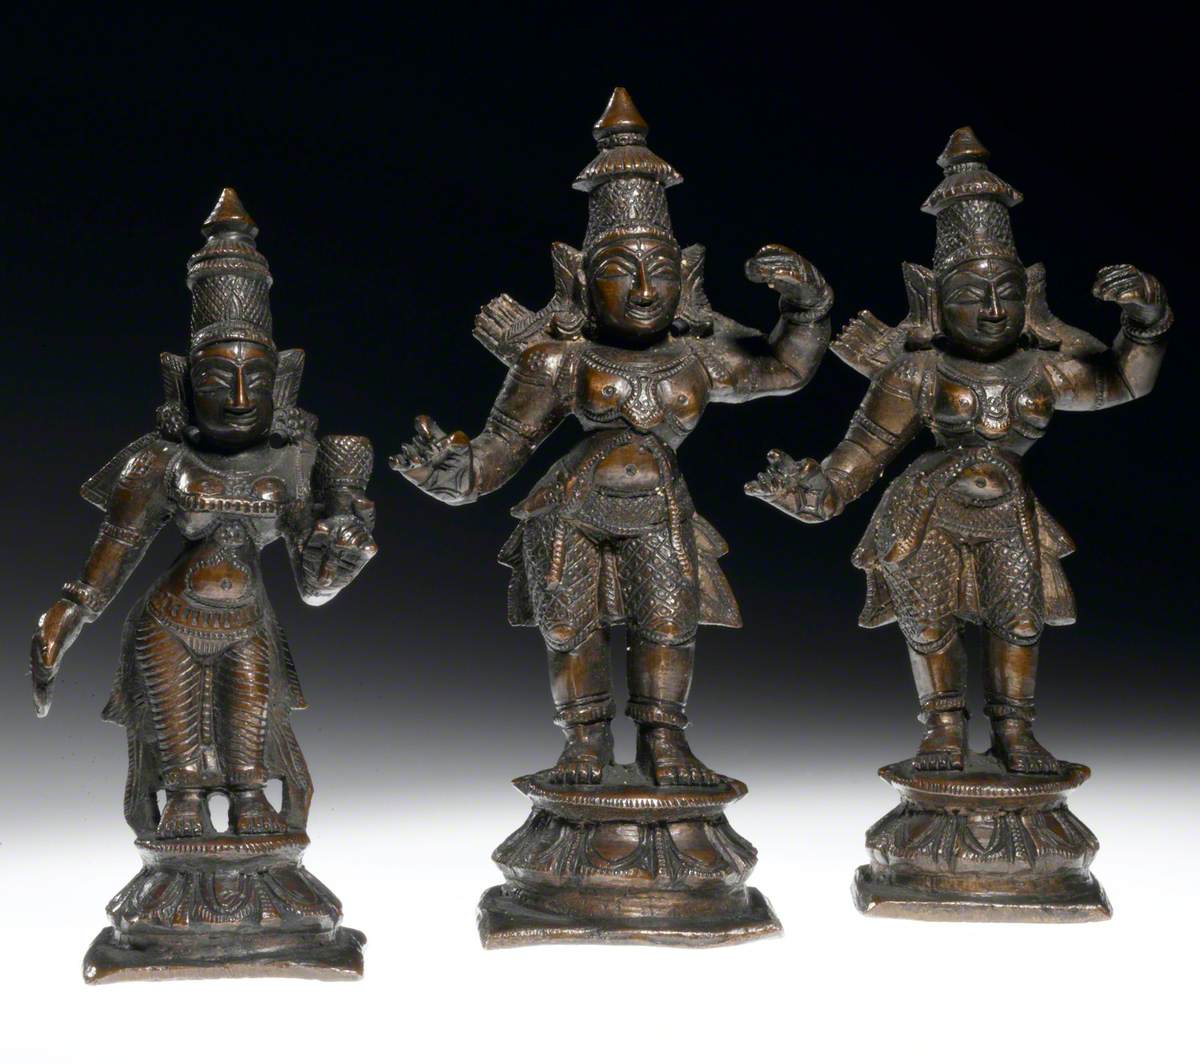 Rama, his wife Sita and his brother Lakshmana